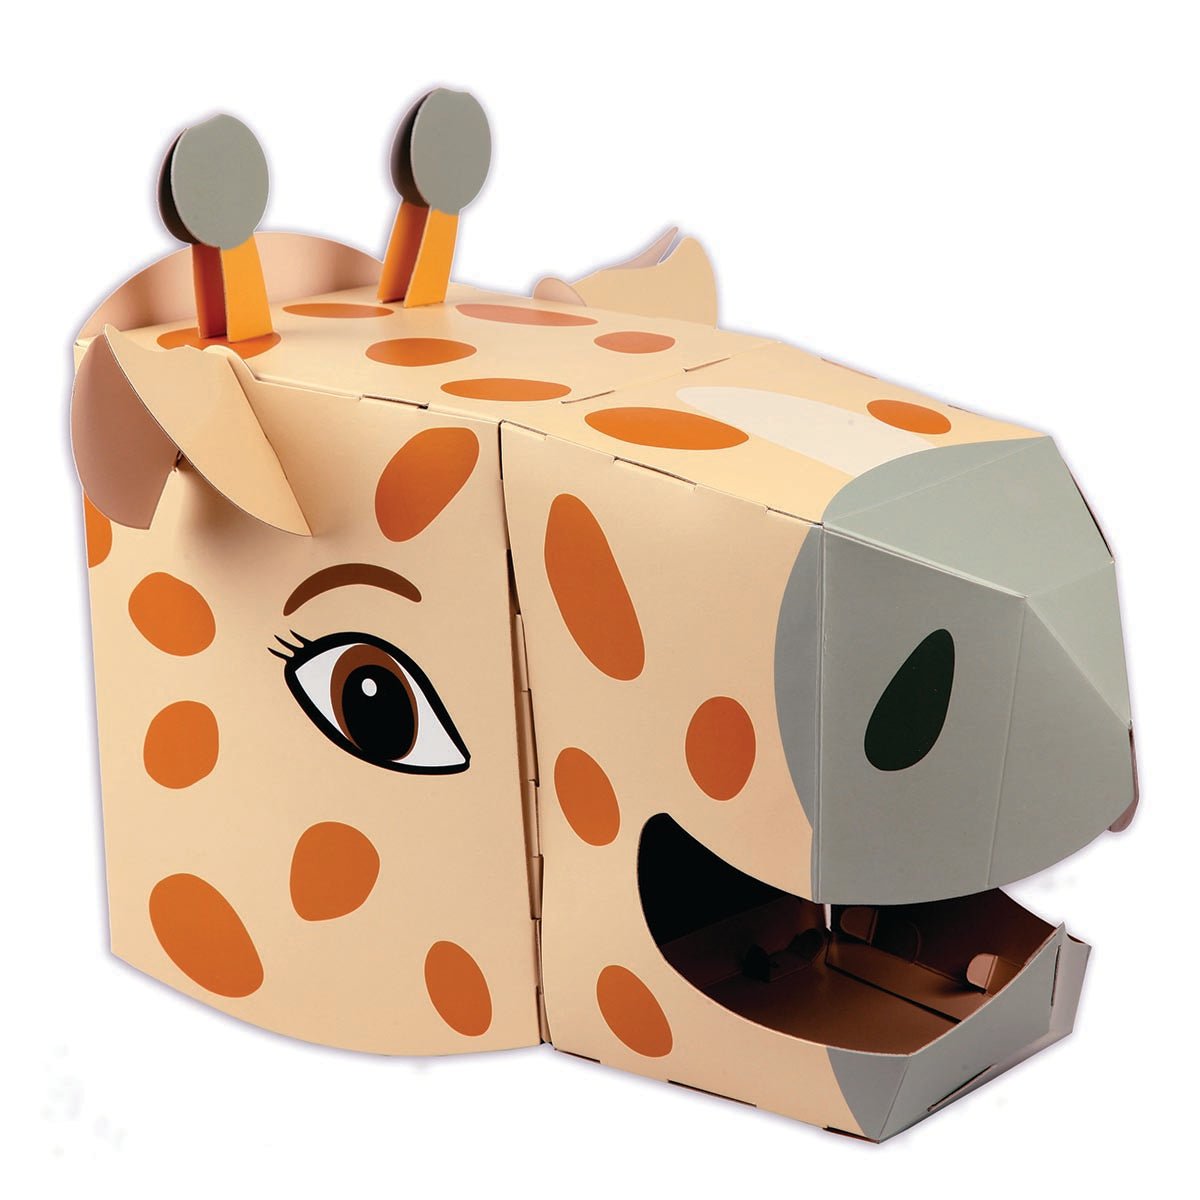 Fiesta Crafts 3D Mask Giraffe | Fiesta Crafts